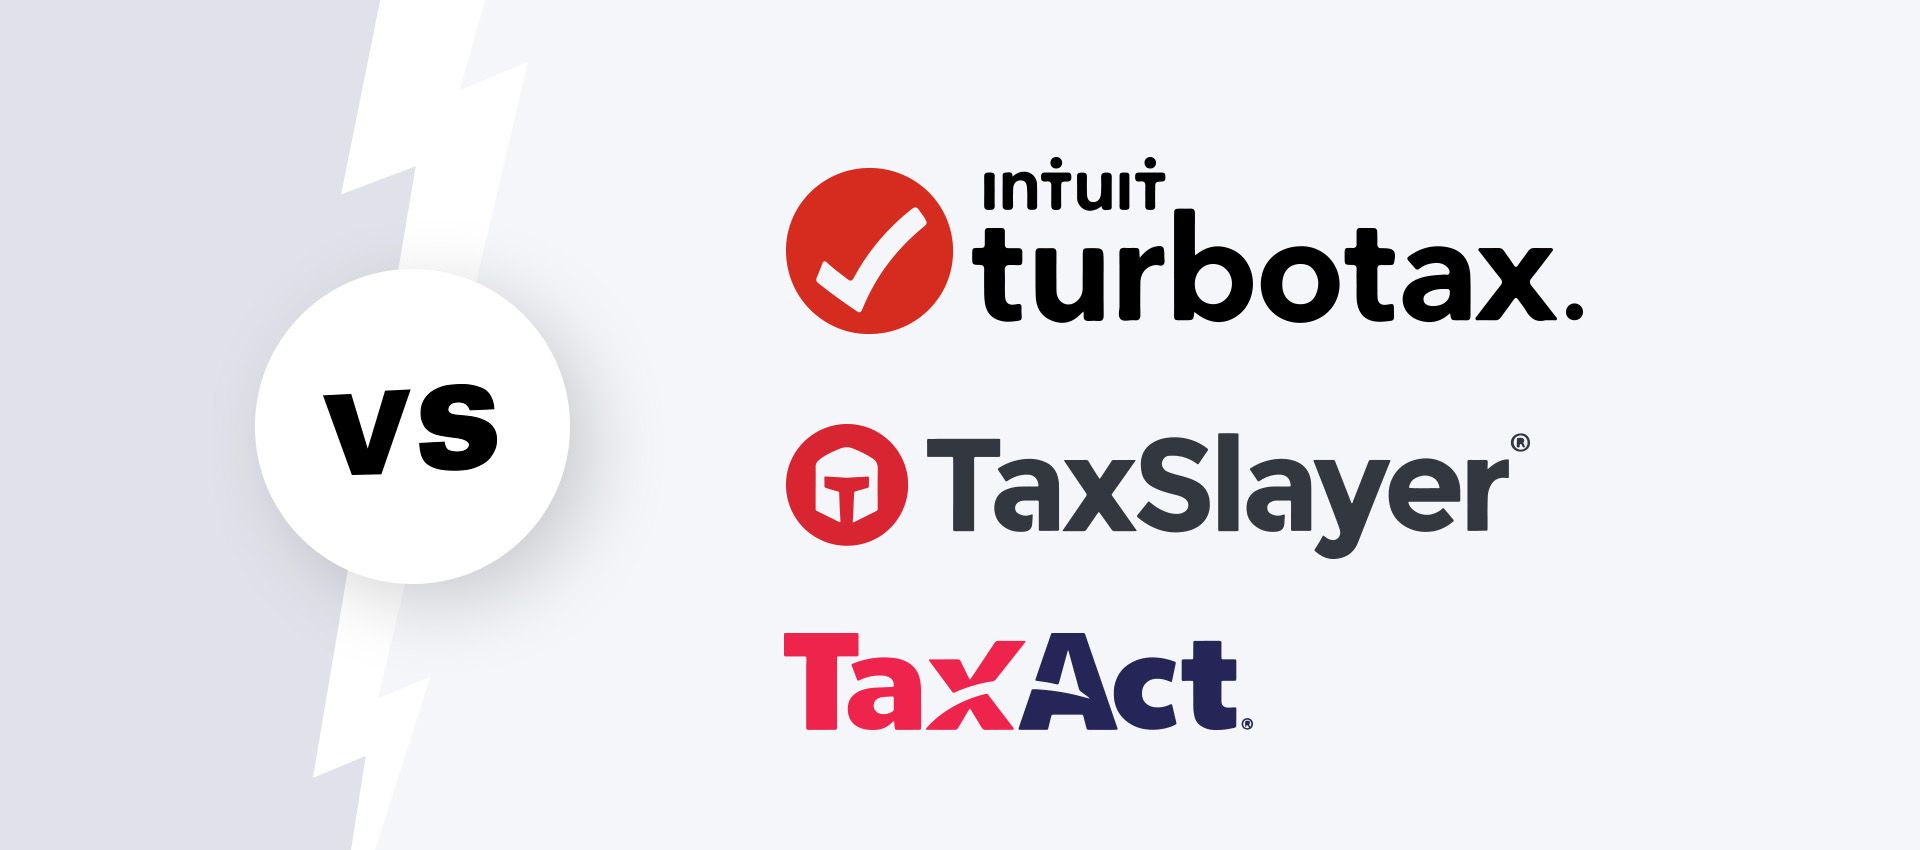 Taxact vs. TurboTax vs. Taxslayer logos